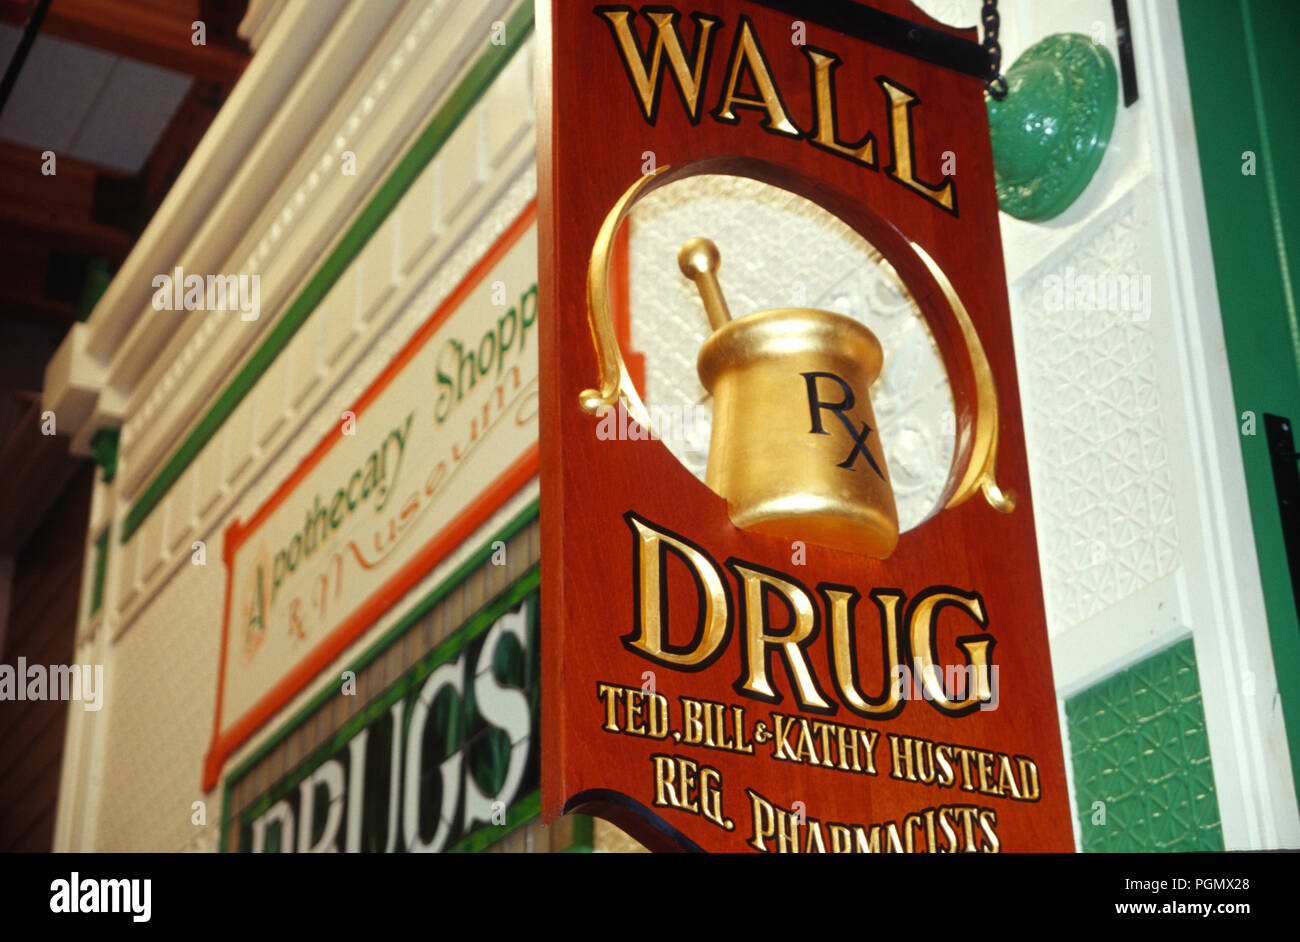 Wall Drug Store Apothicairerie Shoppe et musée, Wall, South Dakota, USA Banque D'Images